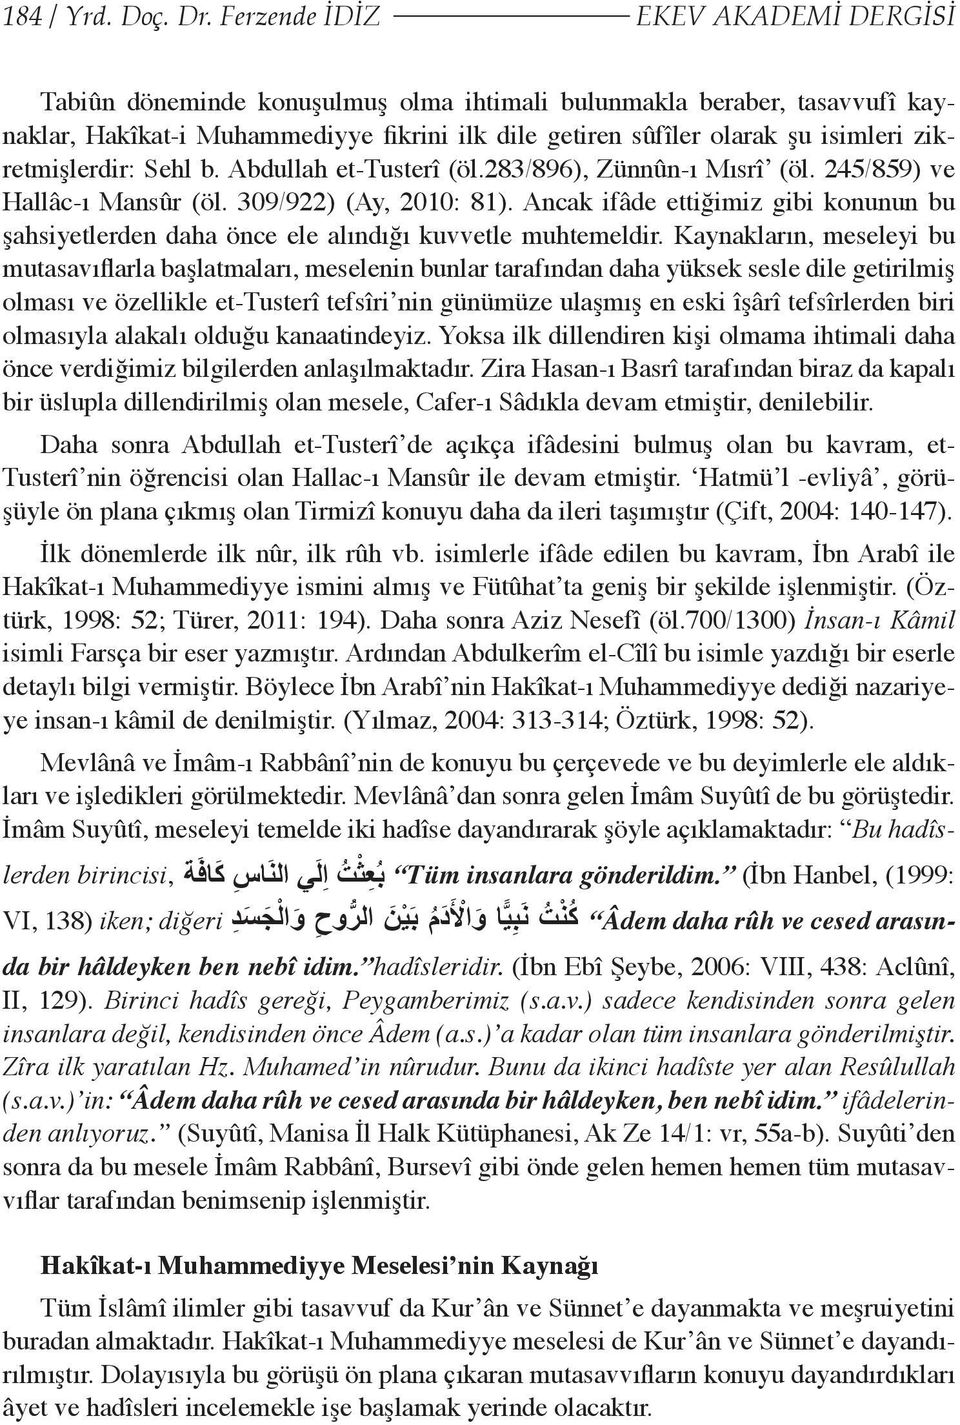 zikretmişlerdir: Sehl b. Abdullah et-tusterî (öl.283/896), Zünnûn-ı Mısrî (öl. 245/859) Hallâc-ı Mansûr (öl. 309/922) (Ay, 2010: 81).